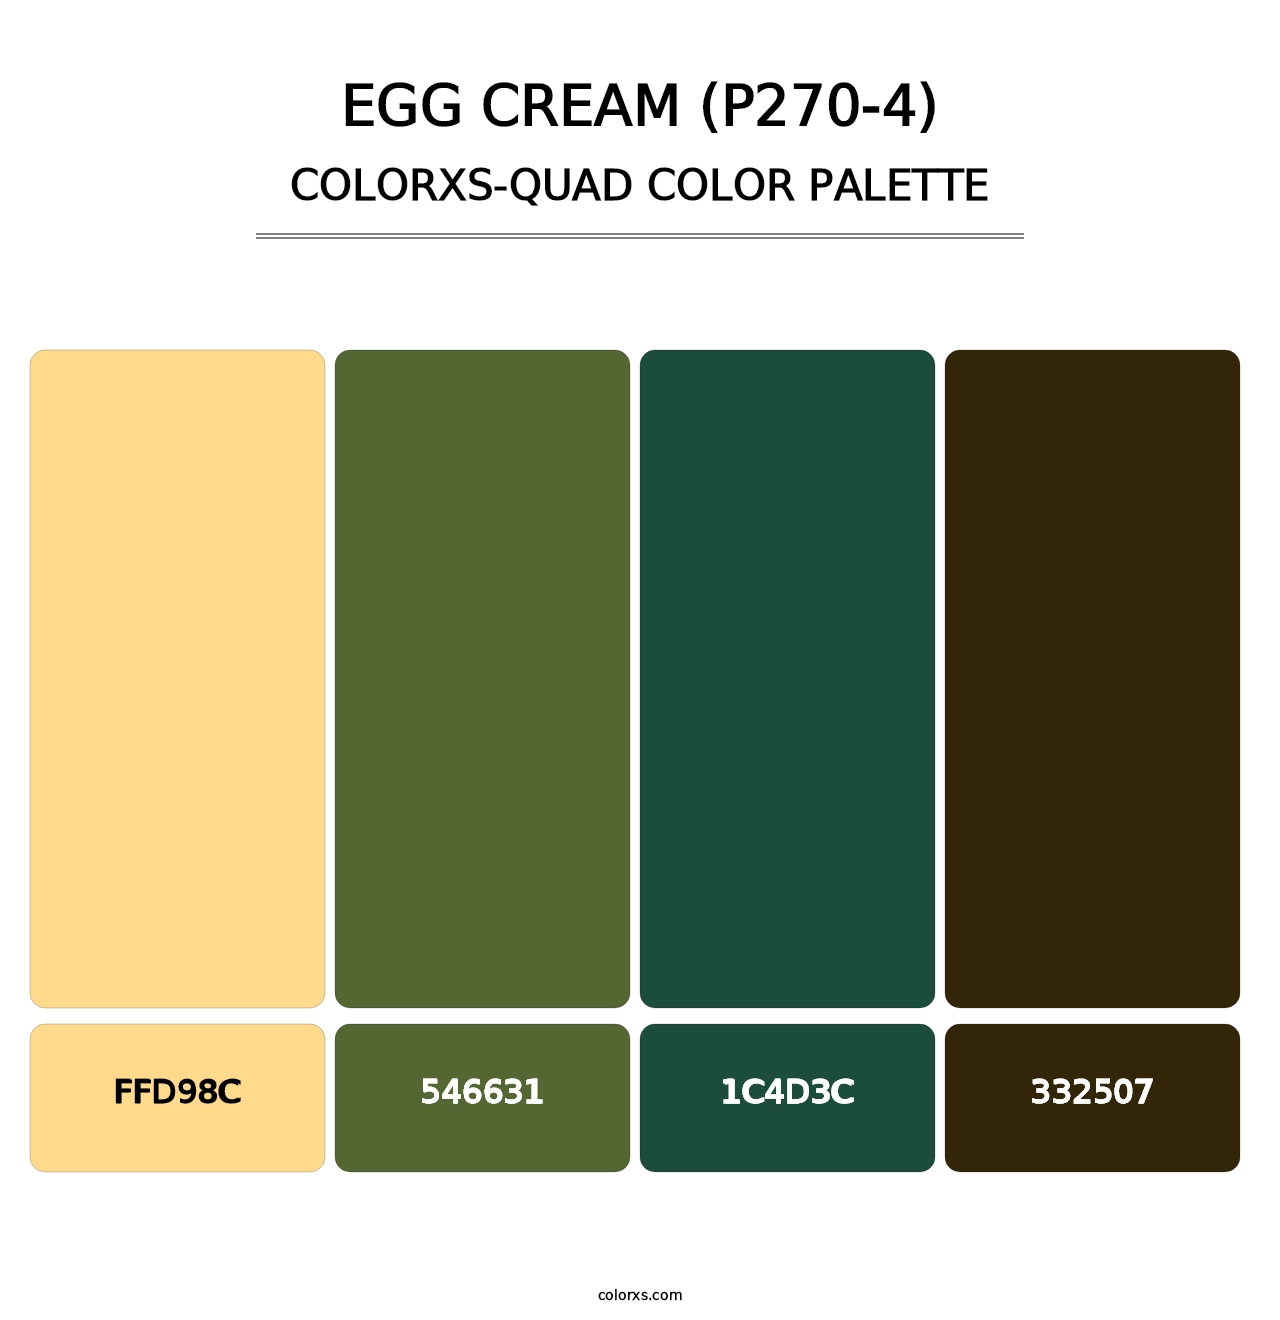 Egg Cream (P270-4) - Colorxs Quad Palette